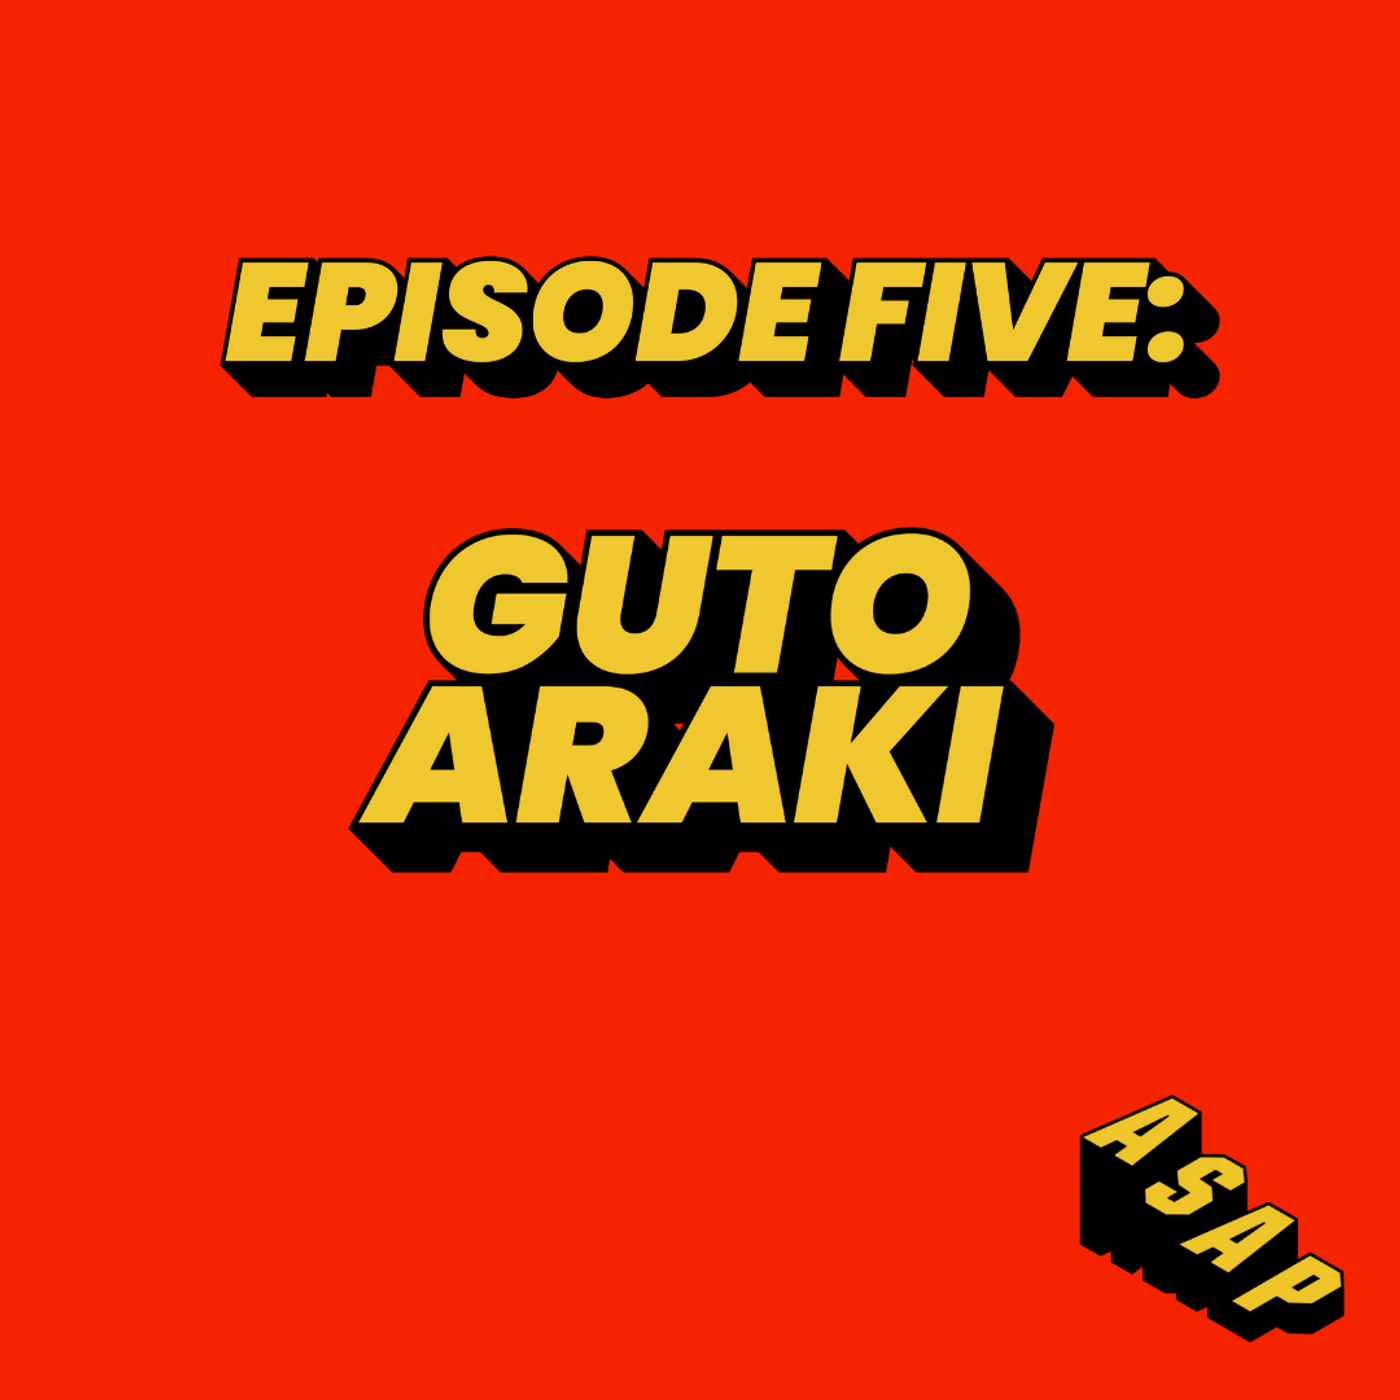 5: Guto Araki